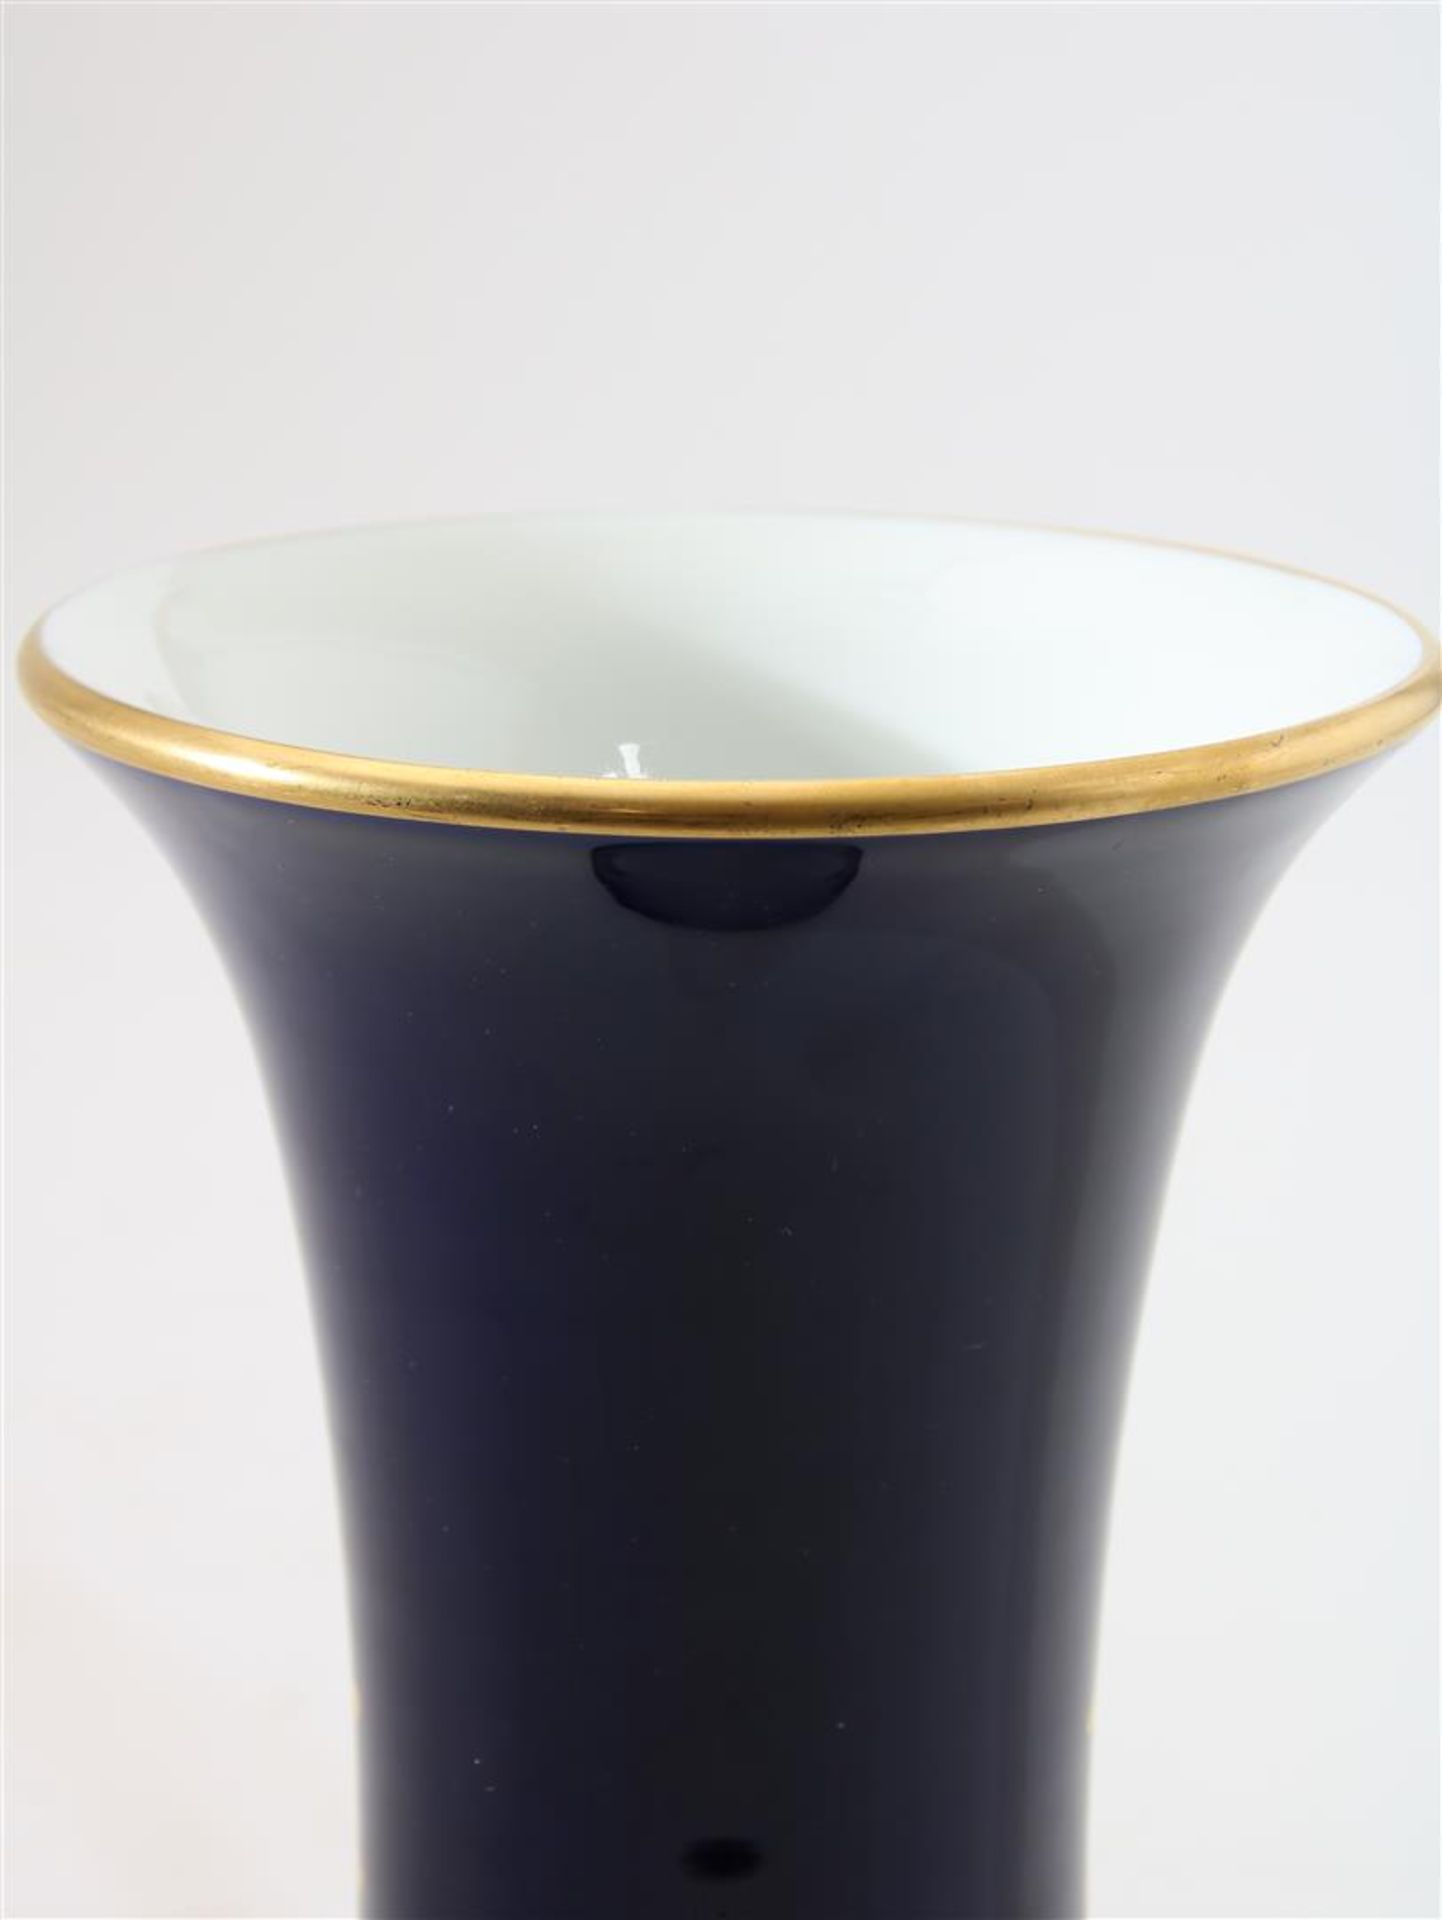 Cylindrical porcelain vase with flower decoration in gold rimmed oval on cobalt blue background, - Image 3 of 4